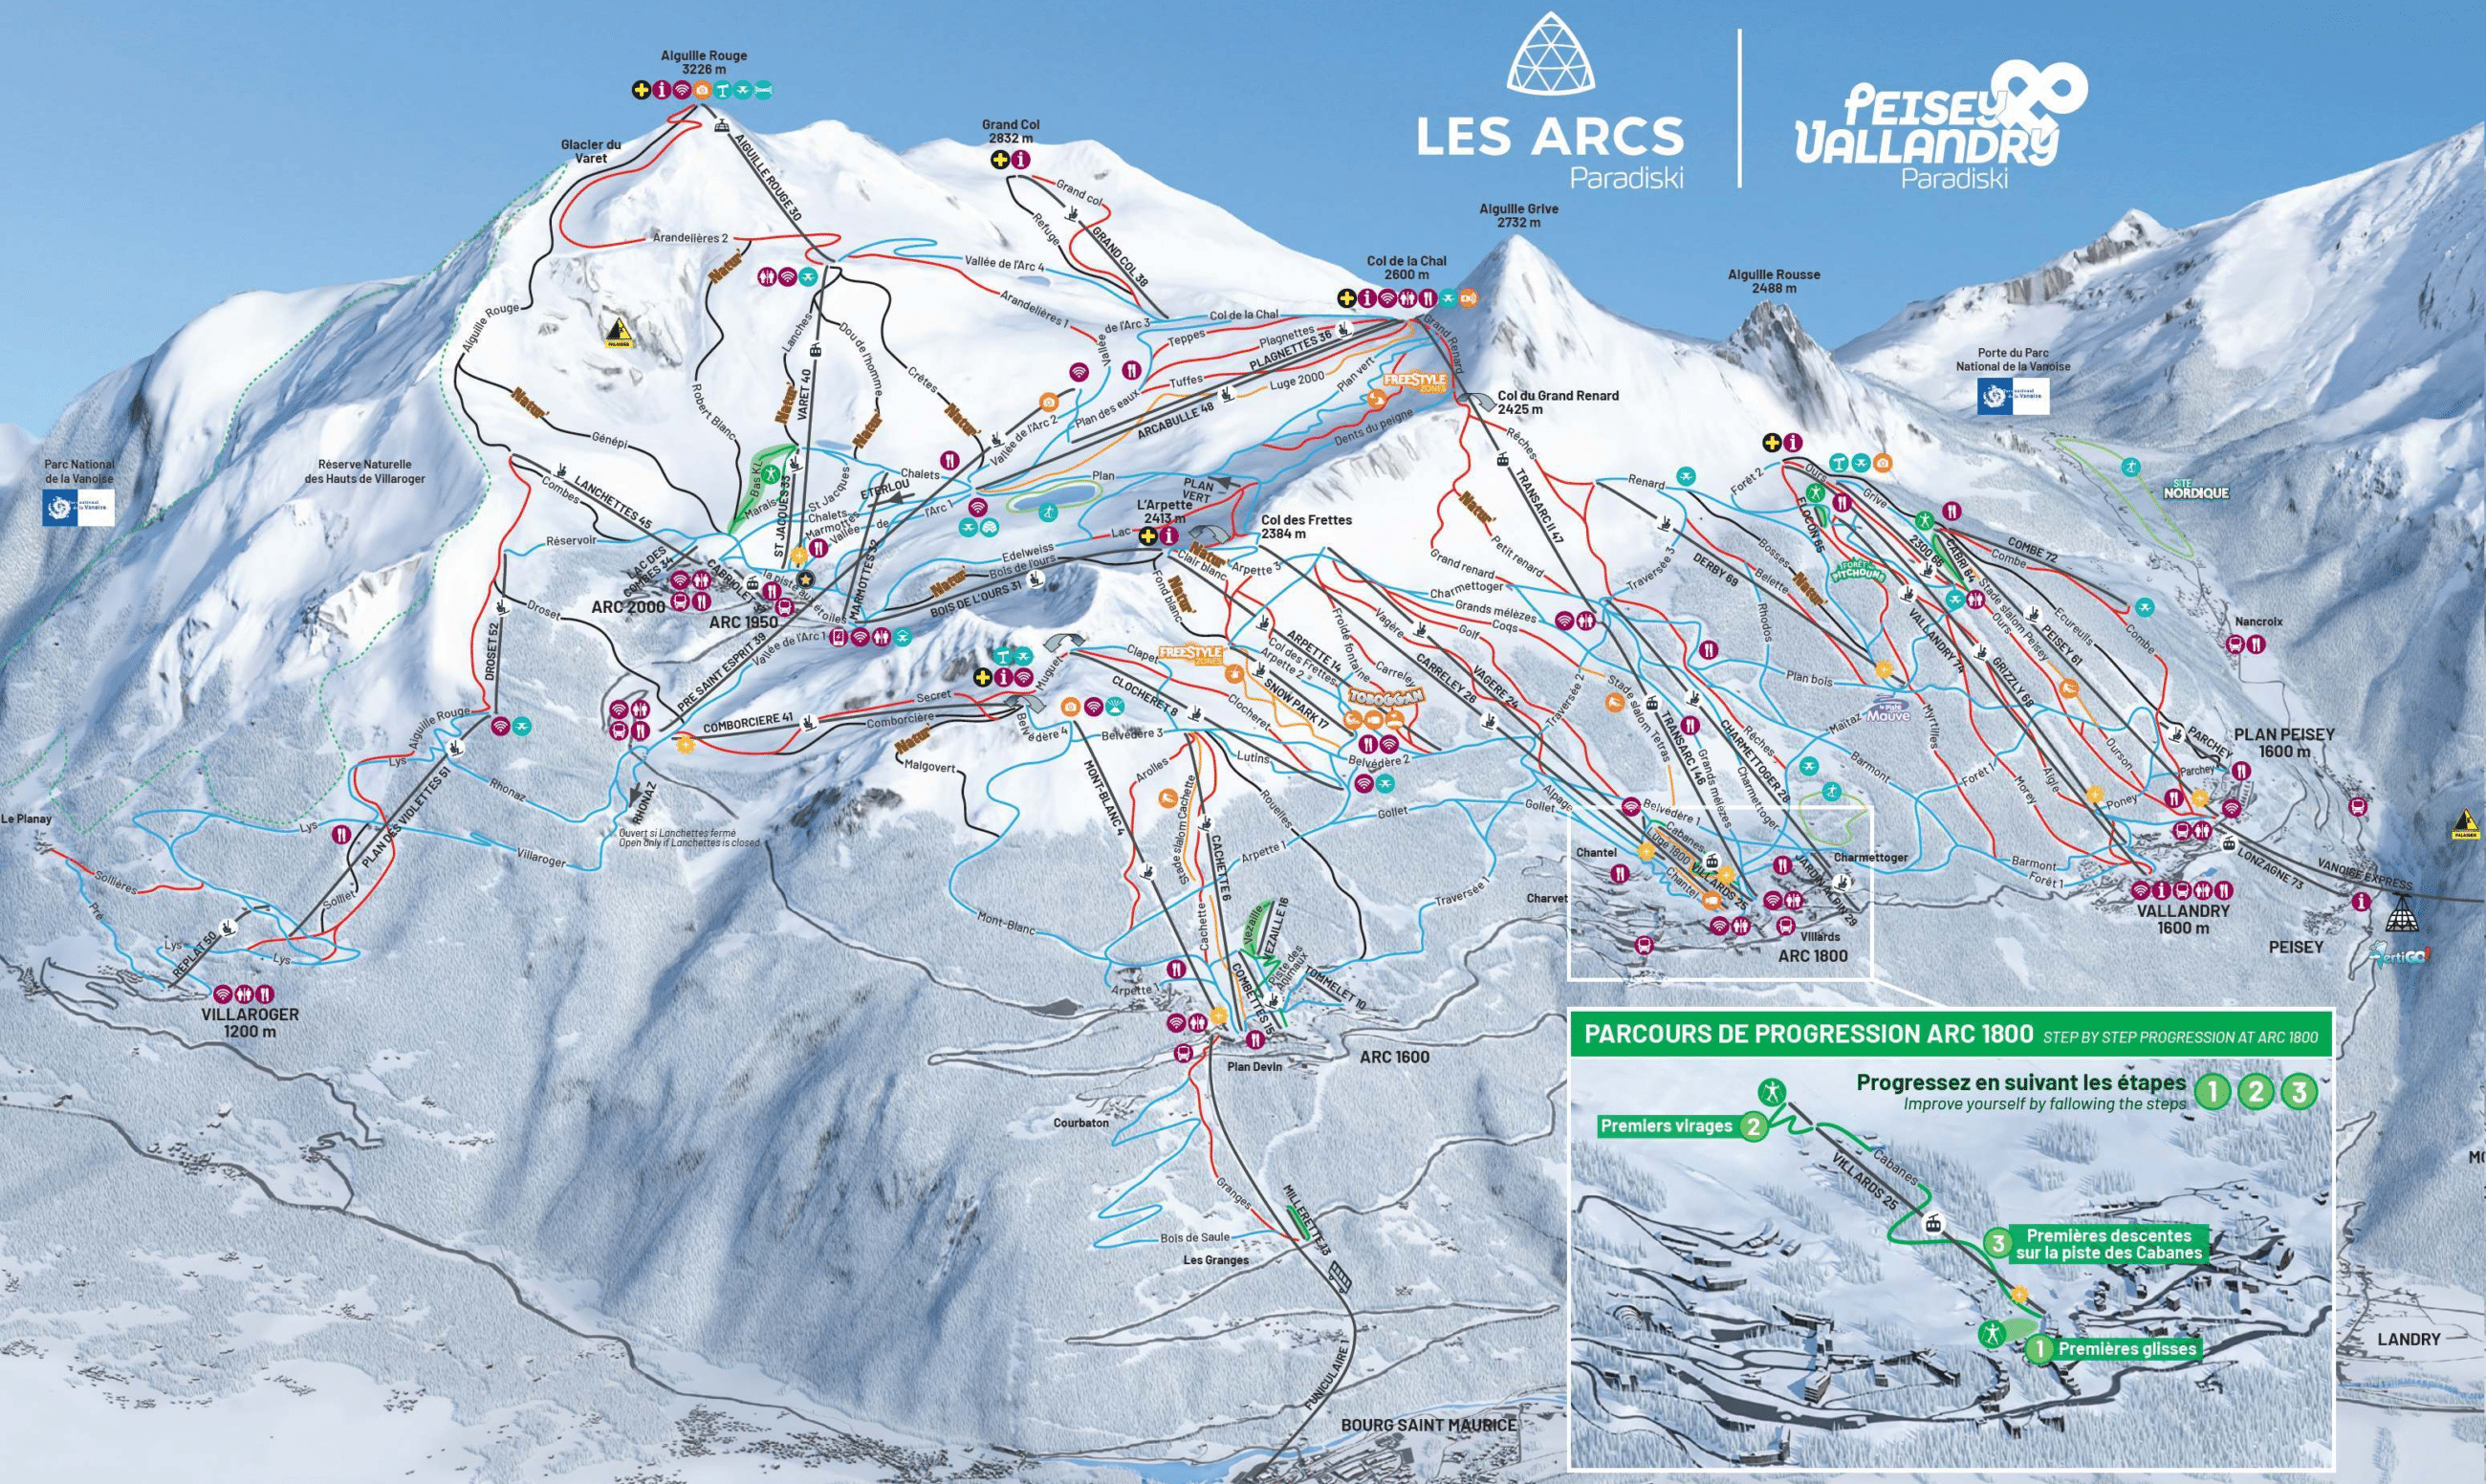 Les Arcs - Plan des pistes de ski